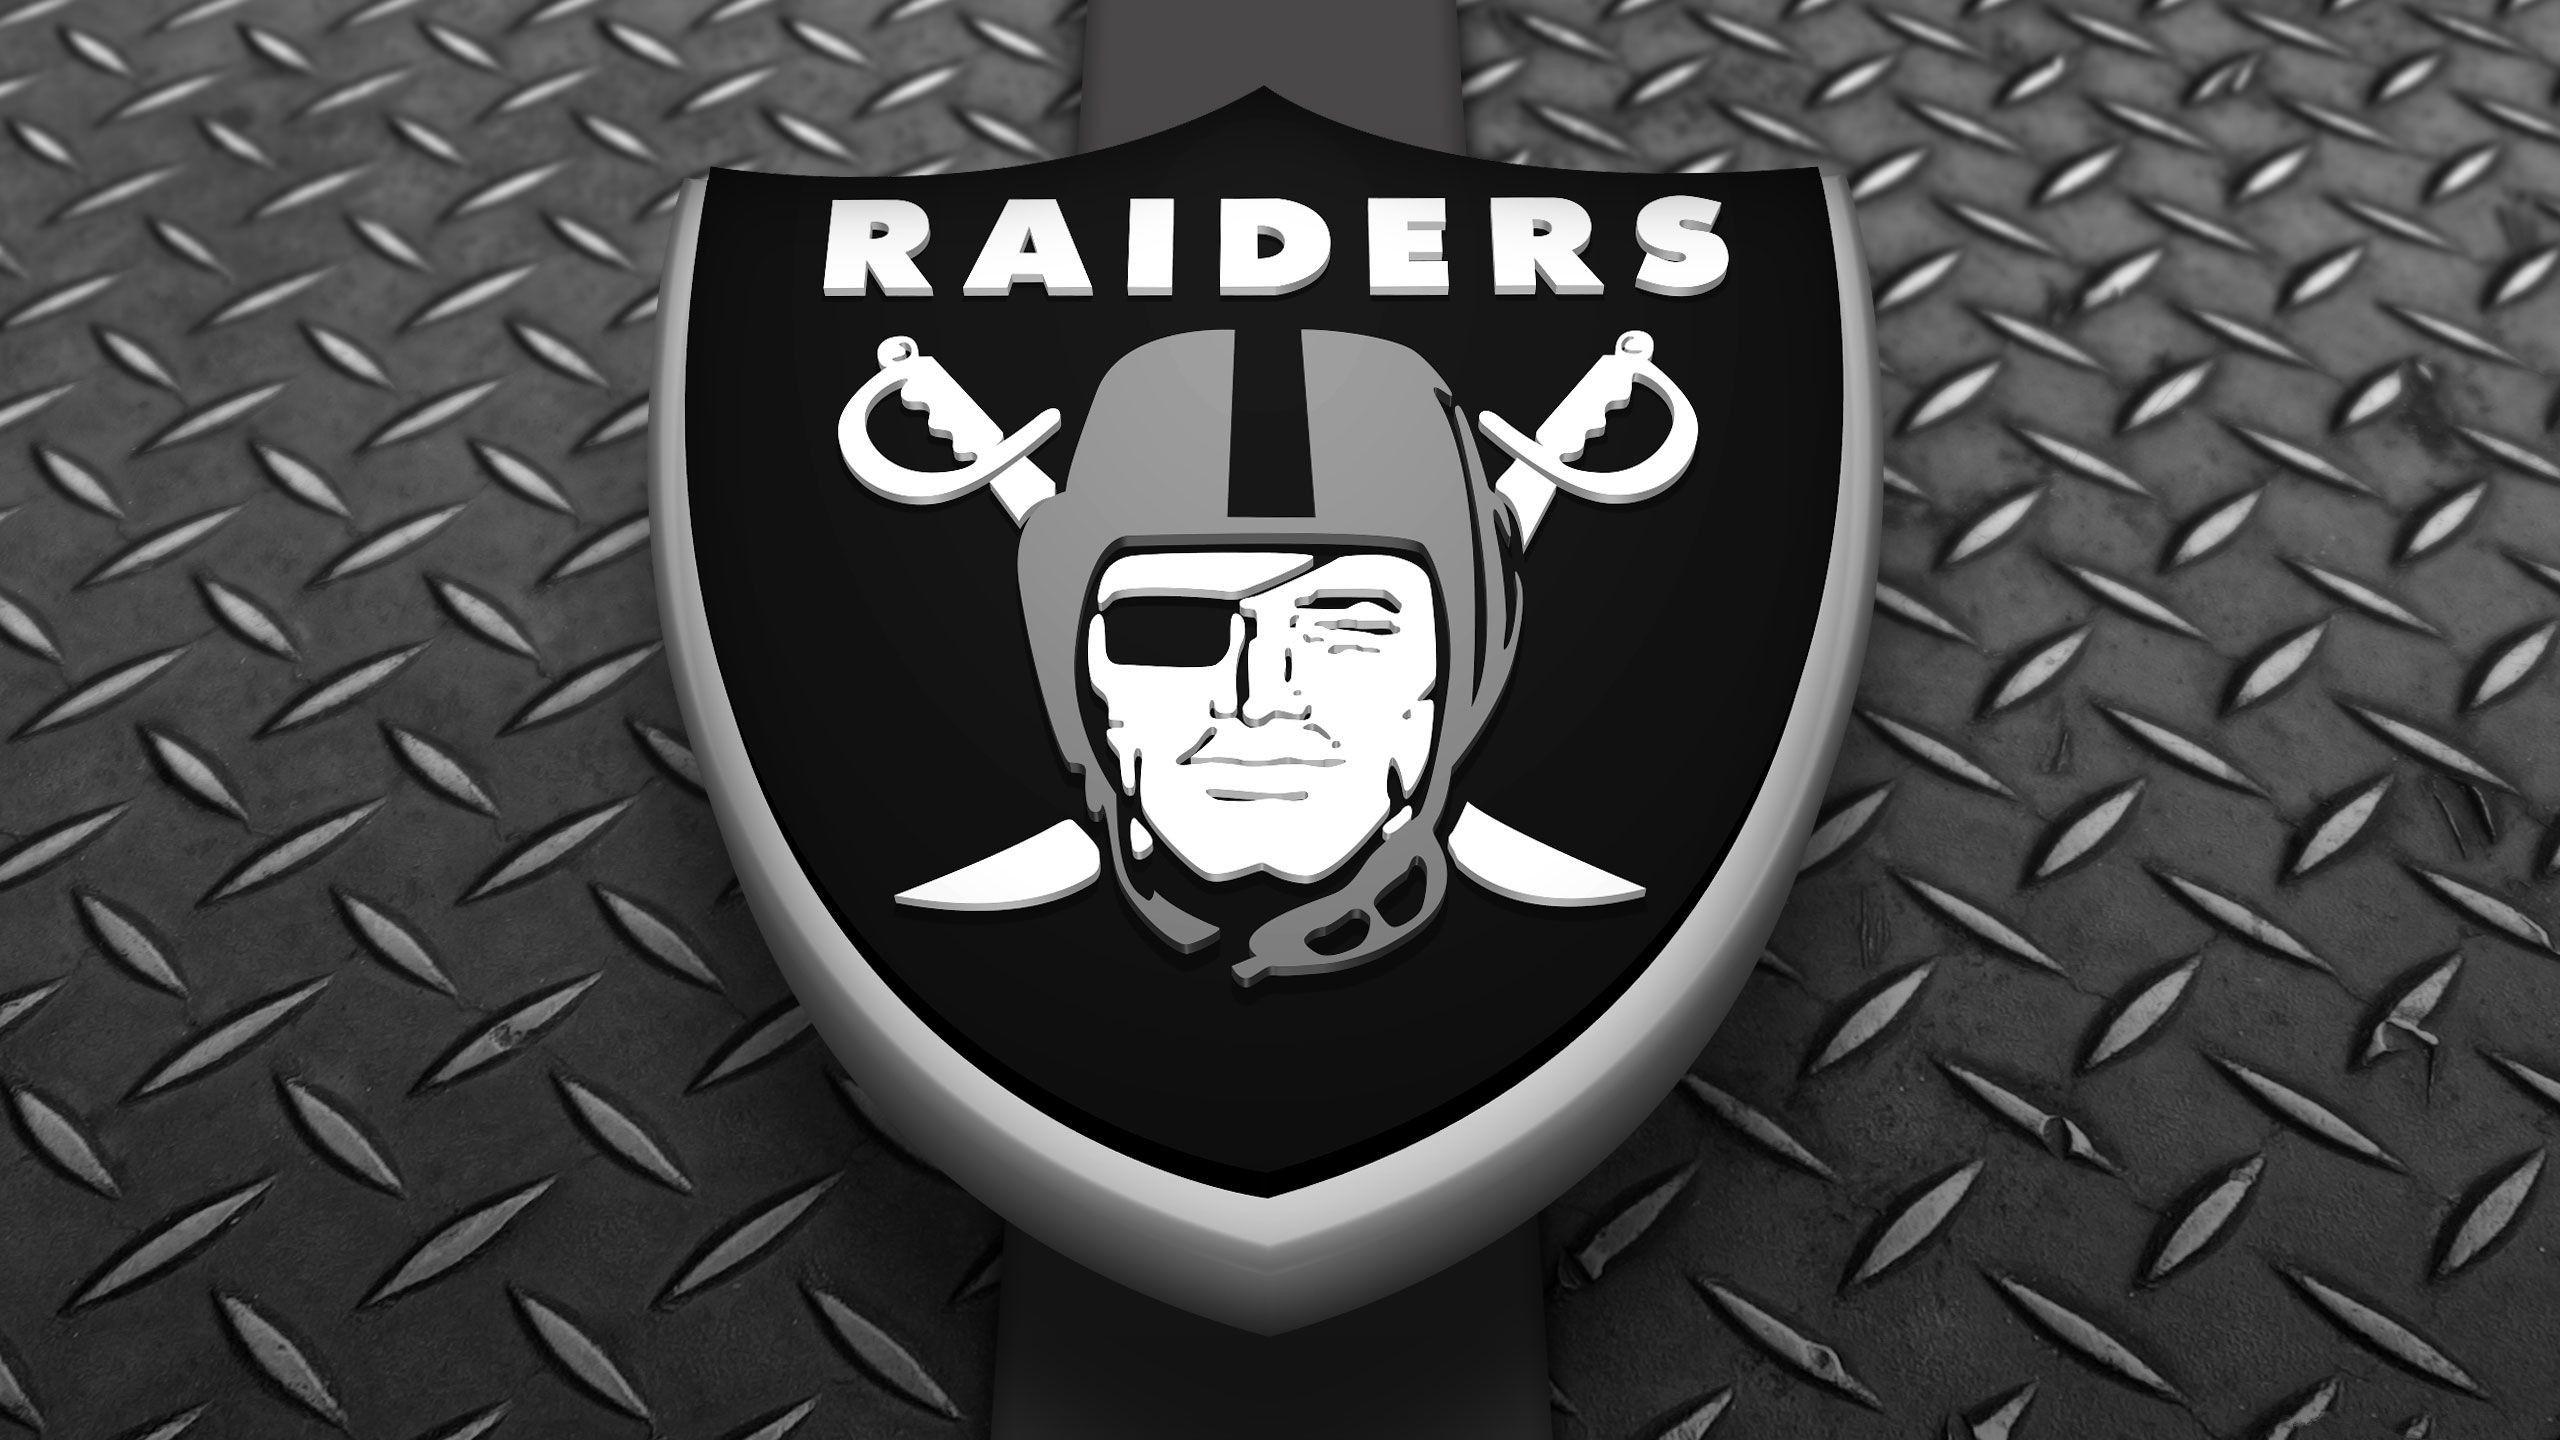 Raiders Widescreen Photo. Beautiful image HD Picture & Desktop